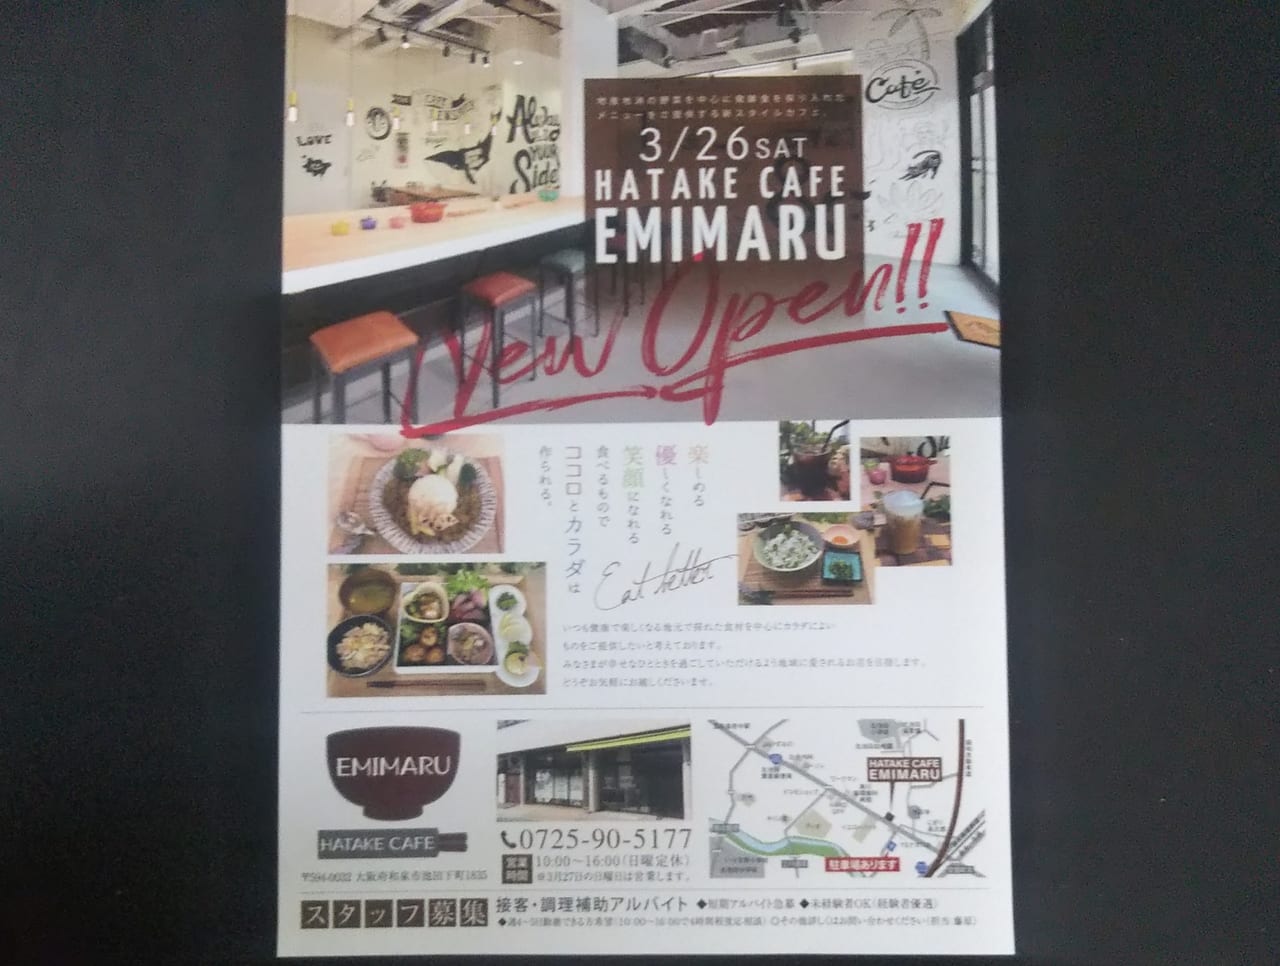 HATAKE CAFE EMIMARU開店